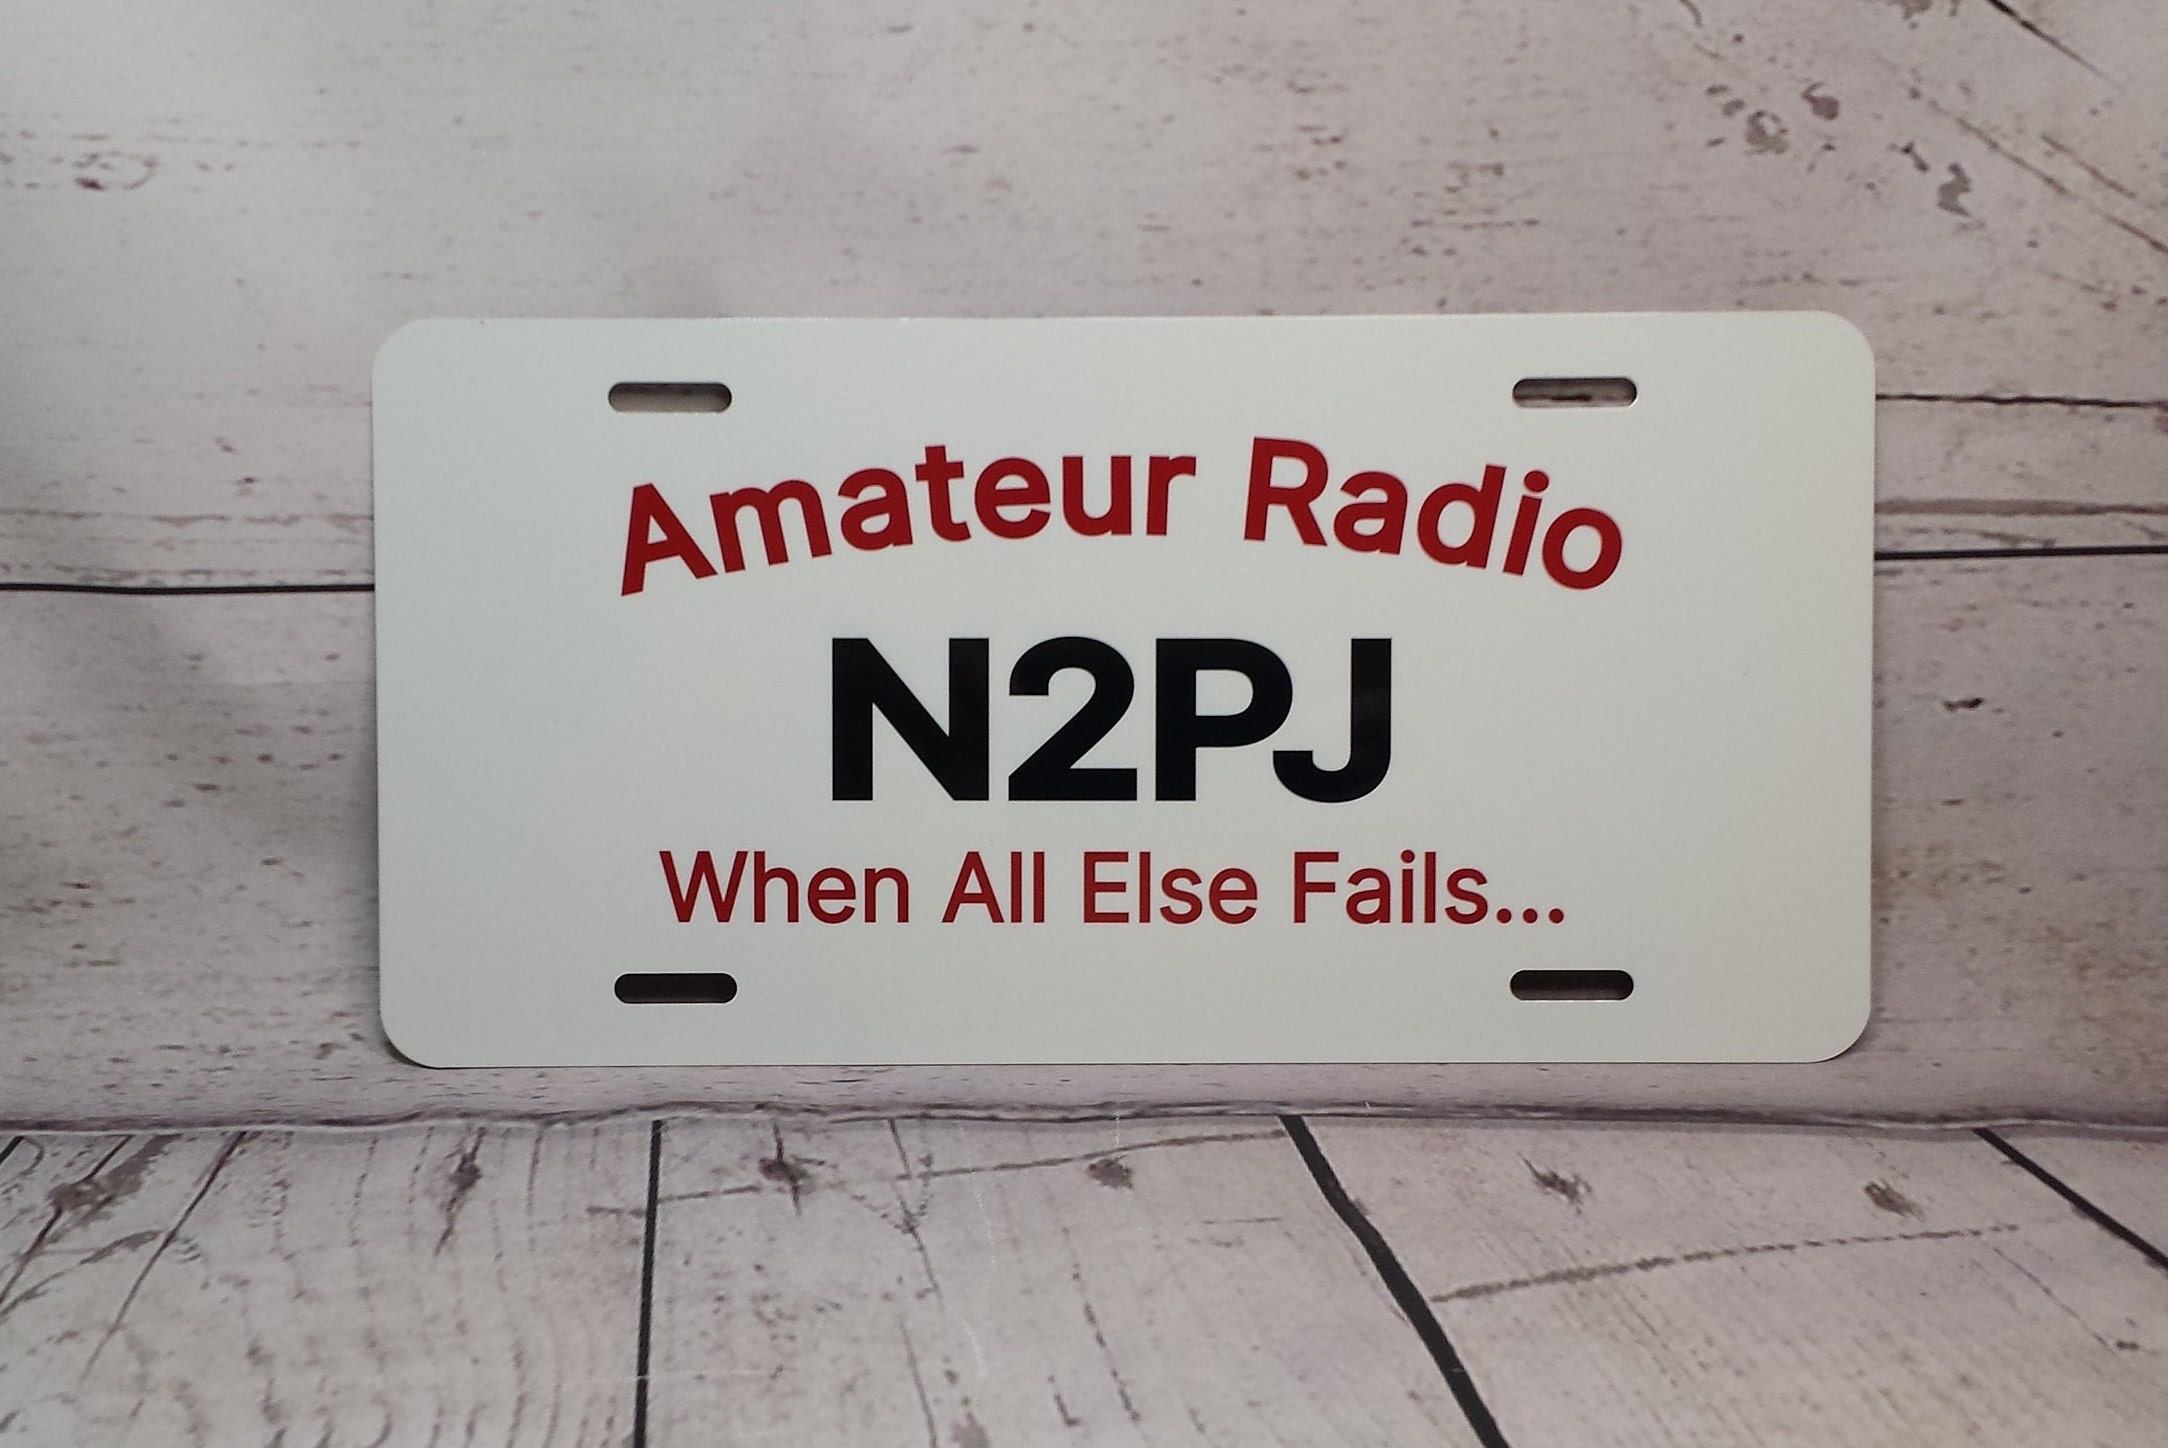 License Plate With Amateur Radio Callsign / Amateur Radio